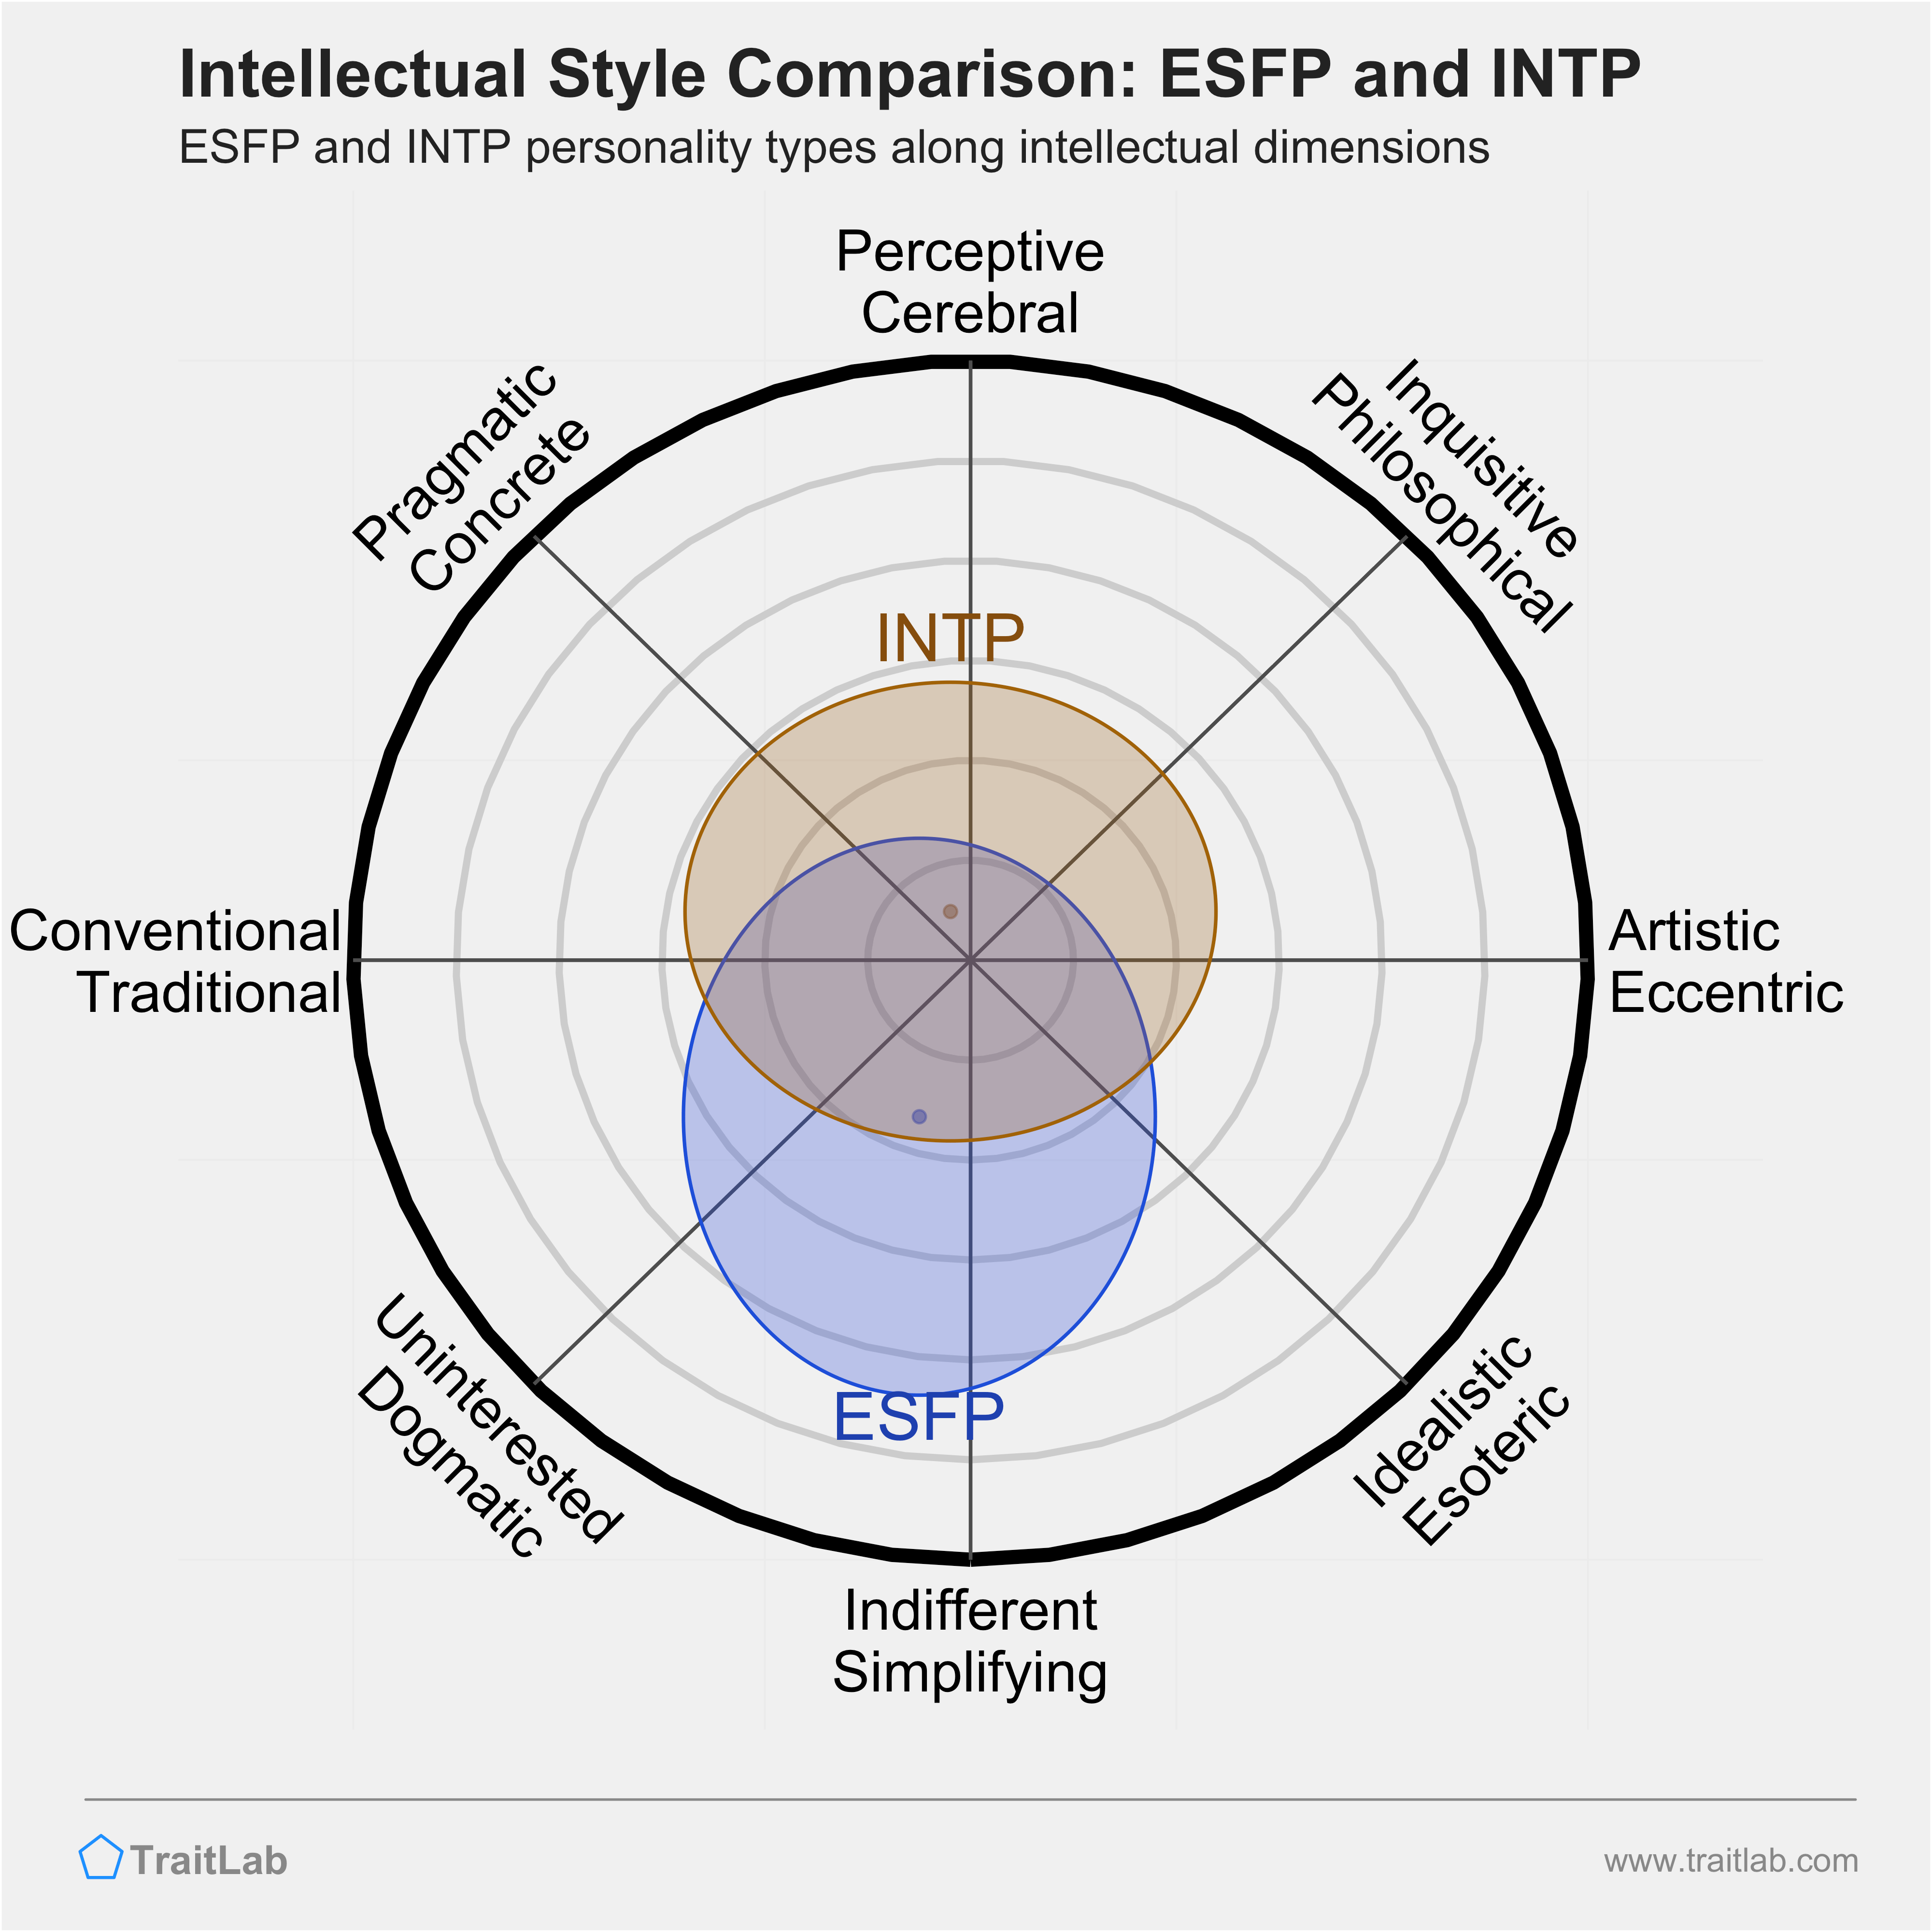 ESFP and INTP comparison across intellectual dimensions